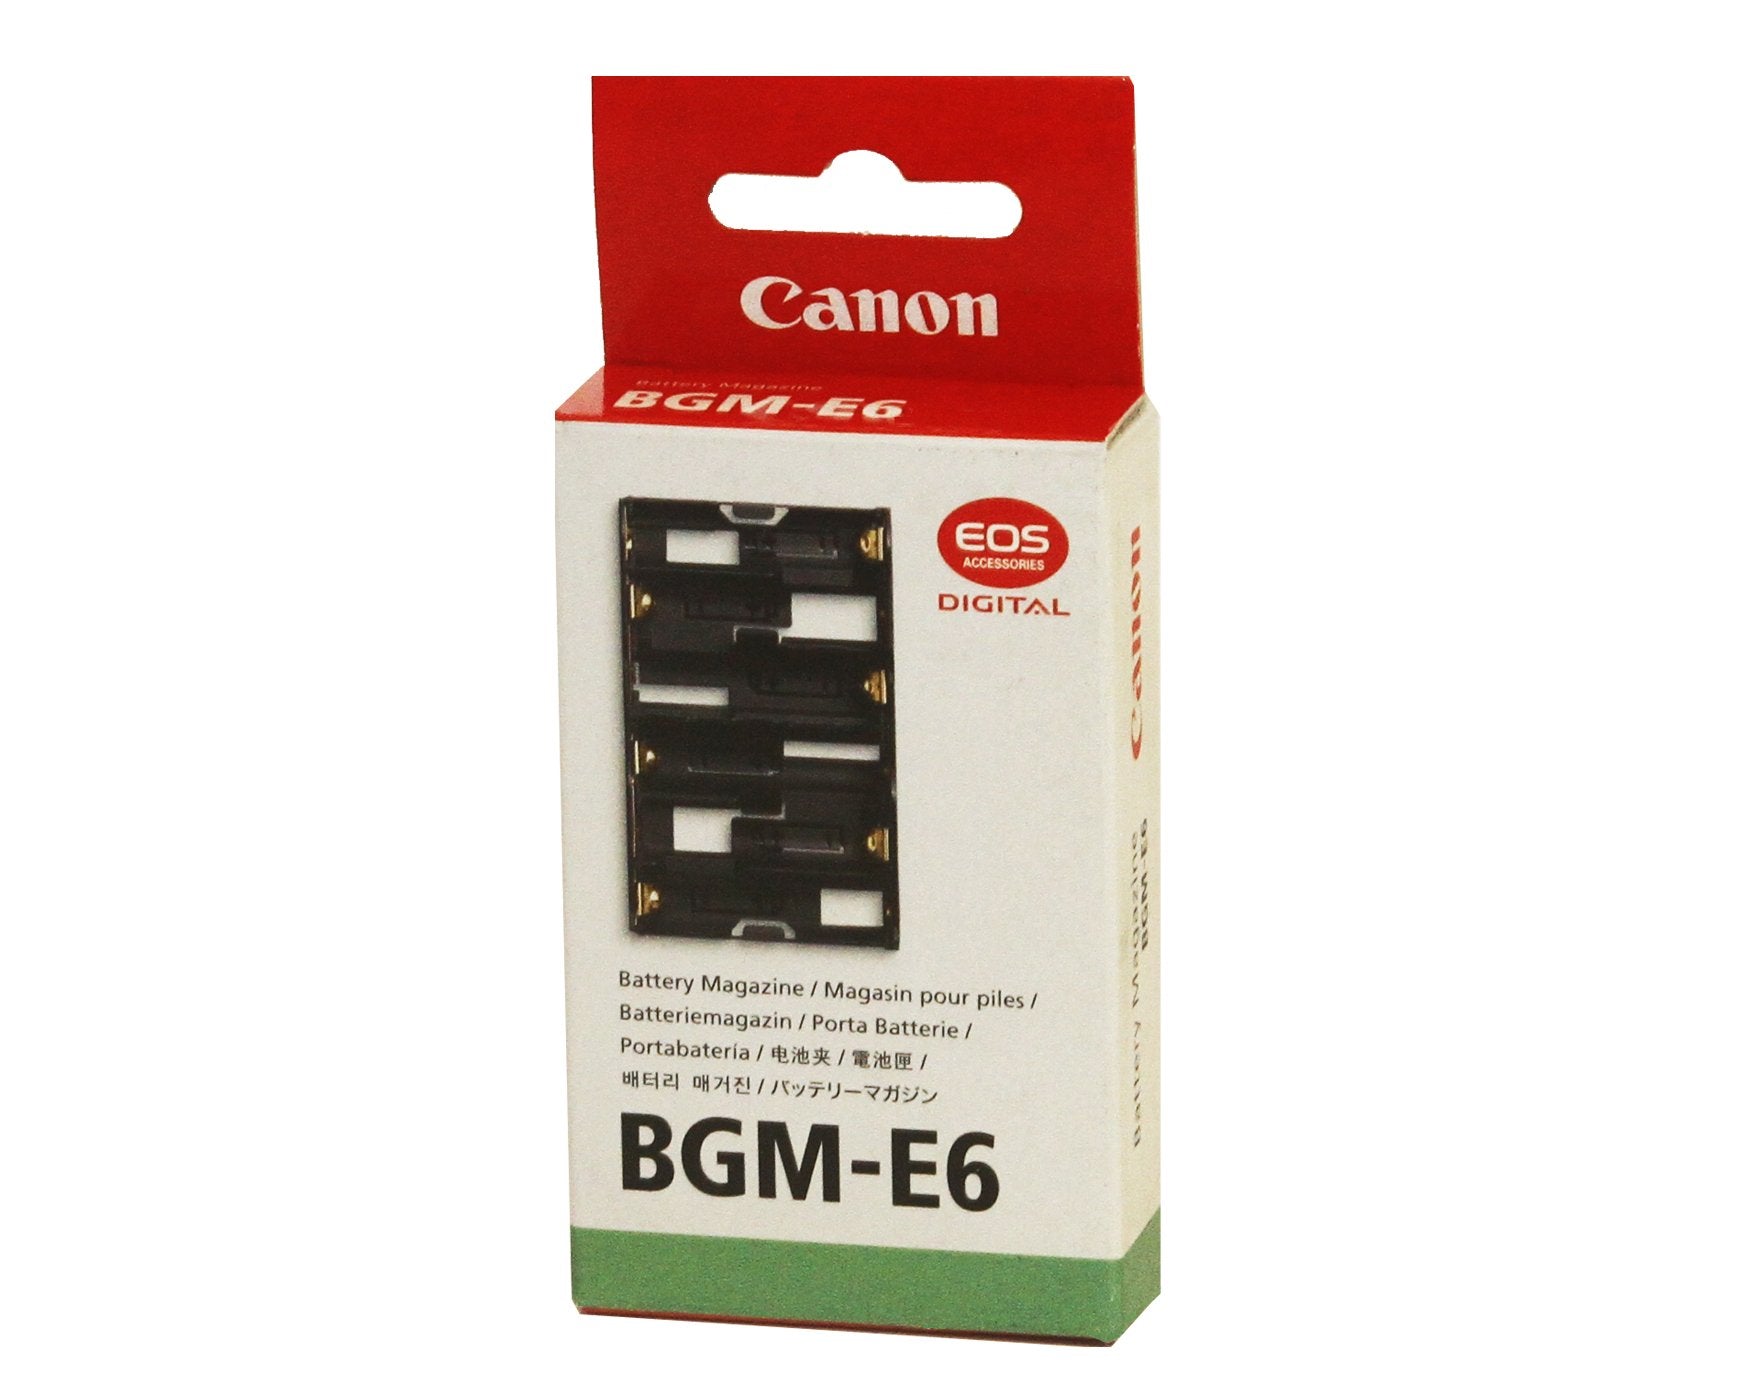 Canon BGM-E6 Battery Magazine for Canon 5D Mark II Digital SLR (Retail Package)